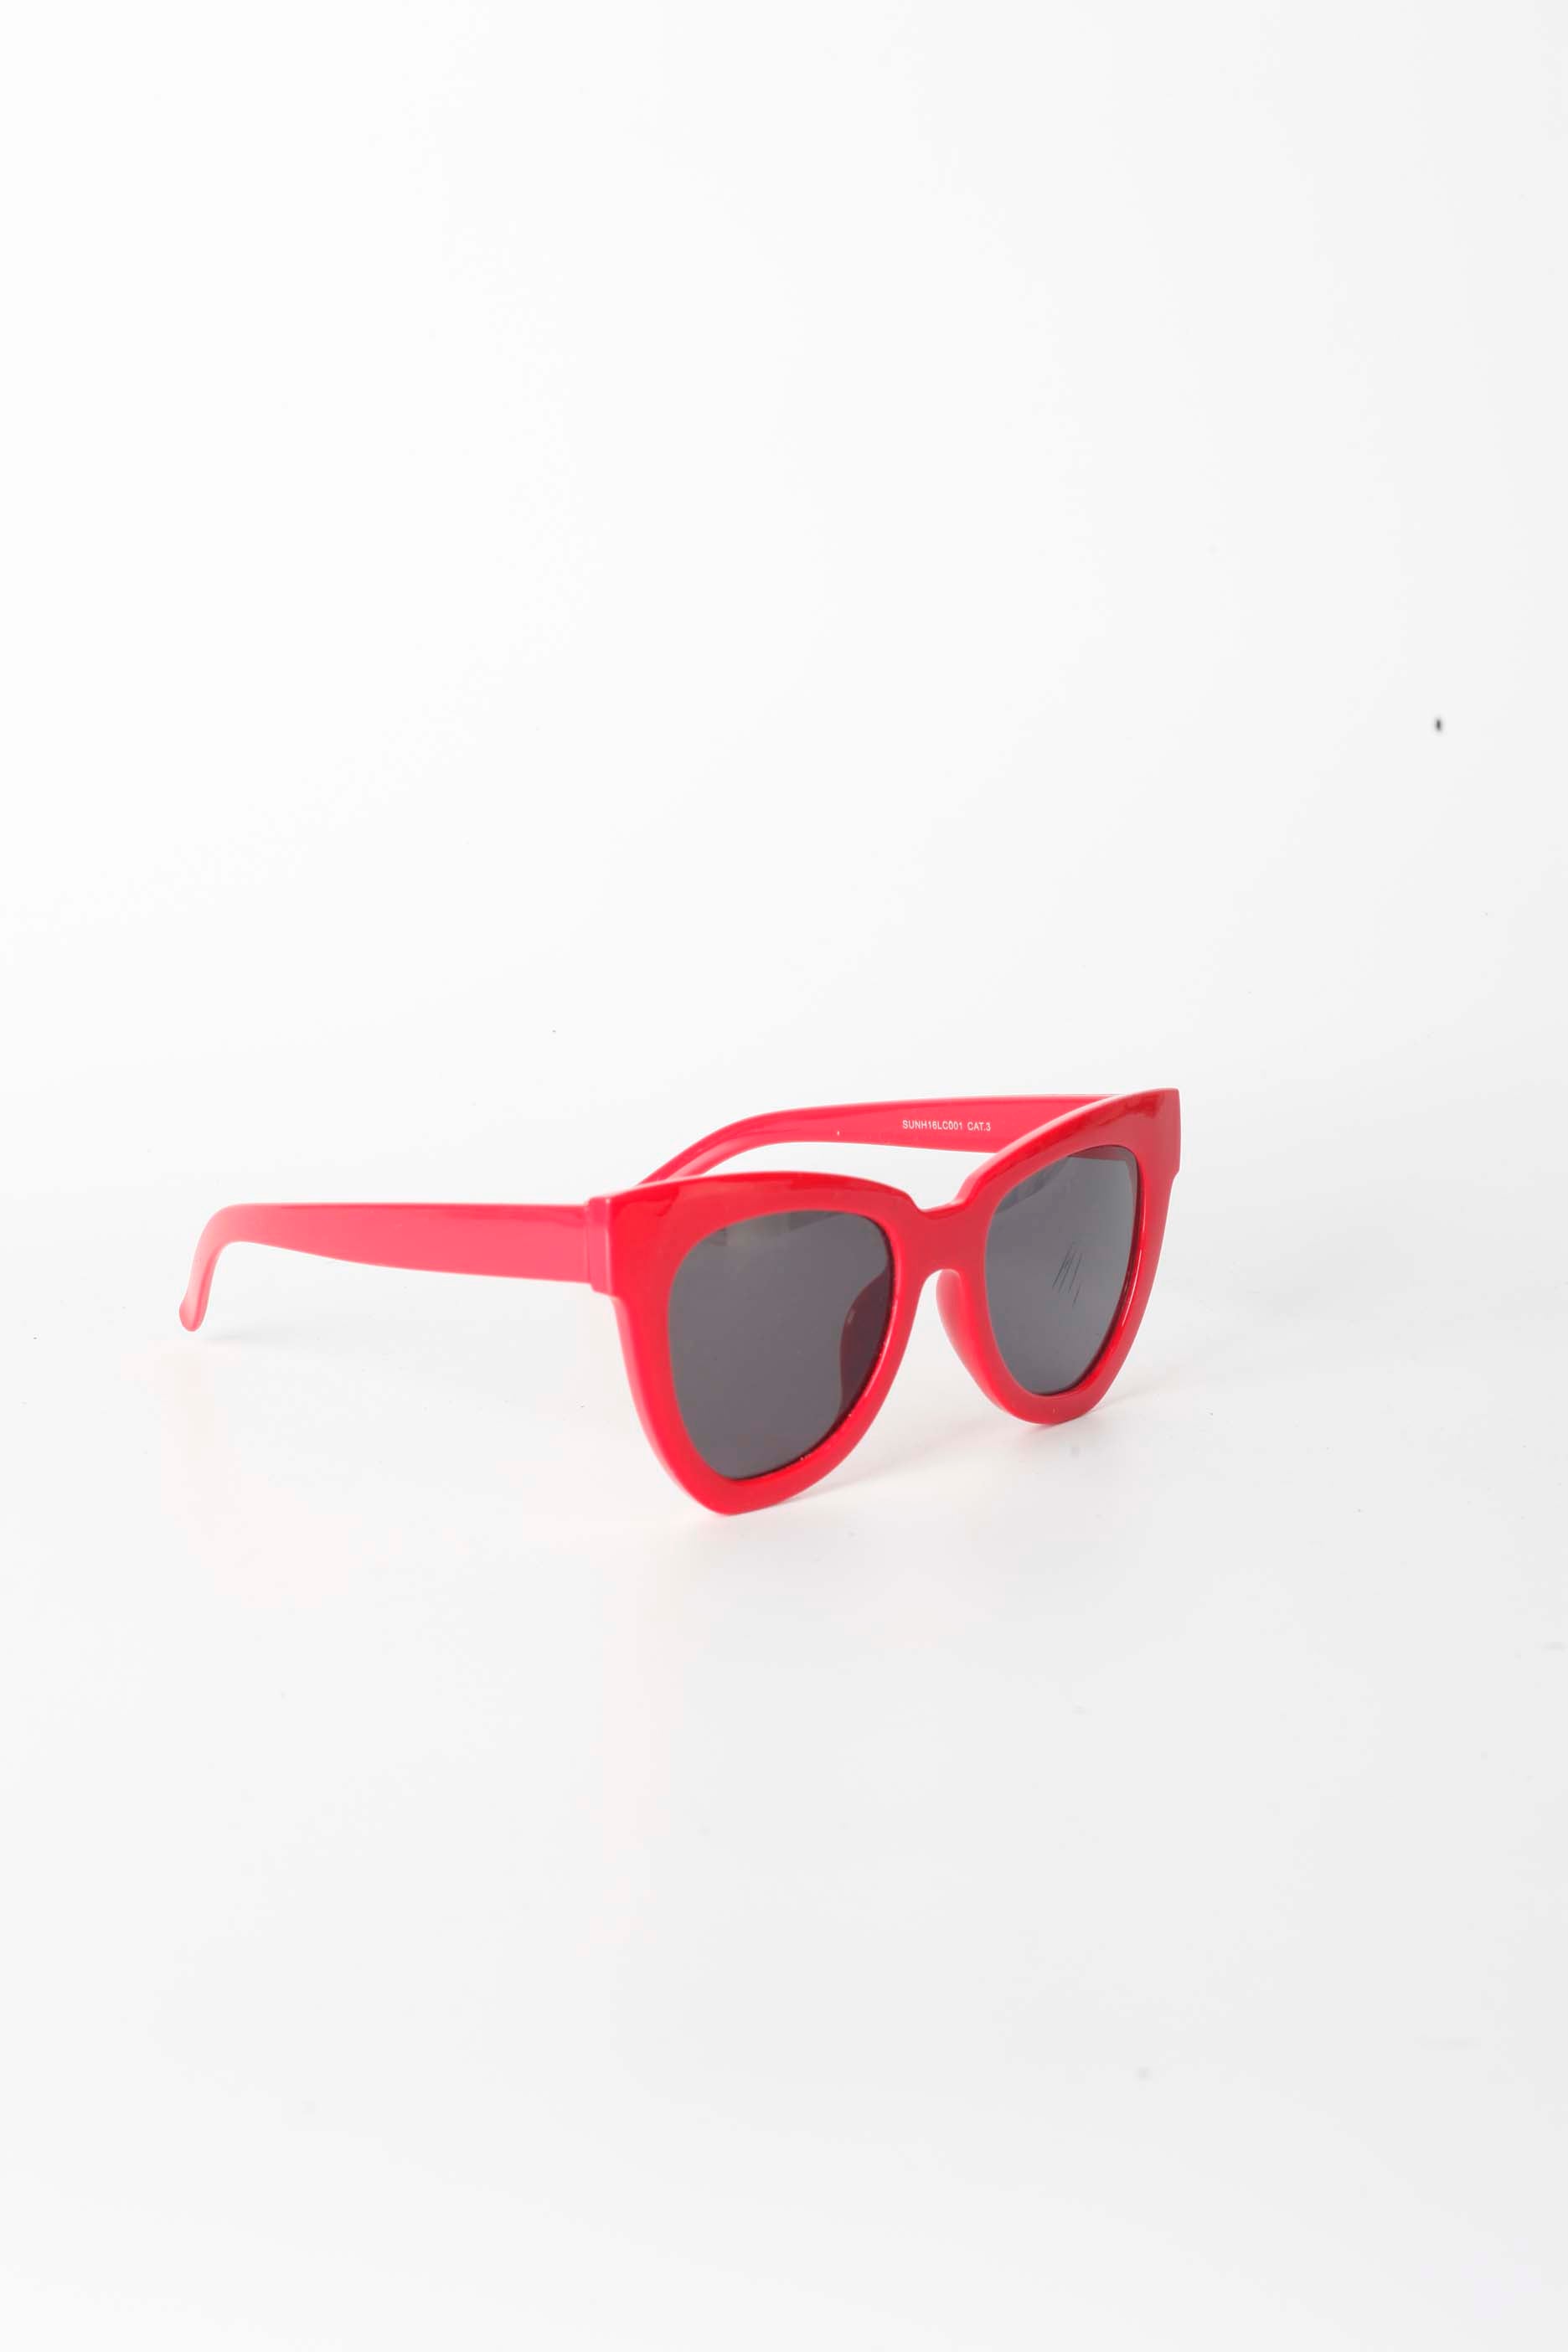 Oversized Red Sunglasses